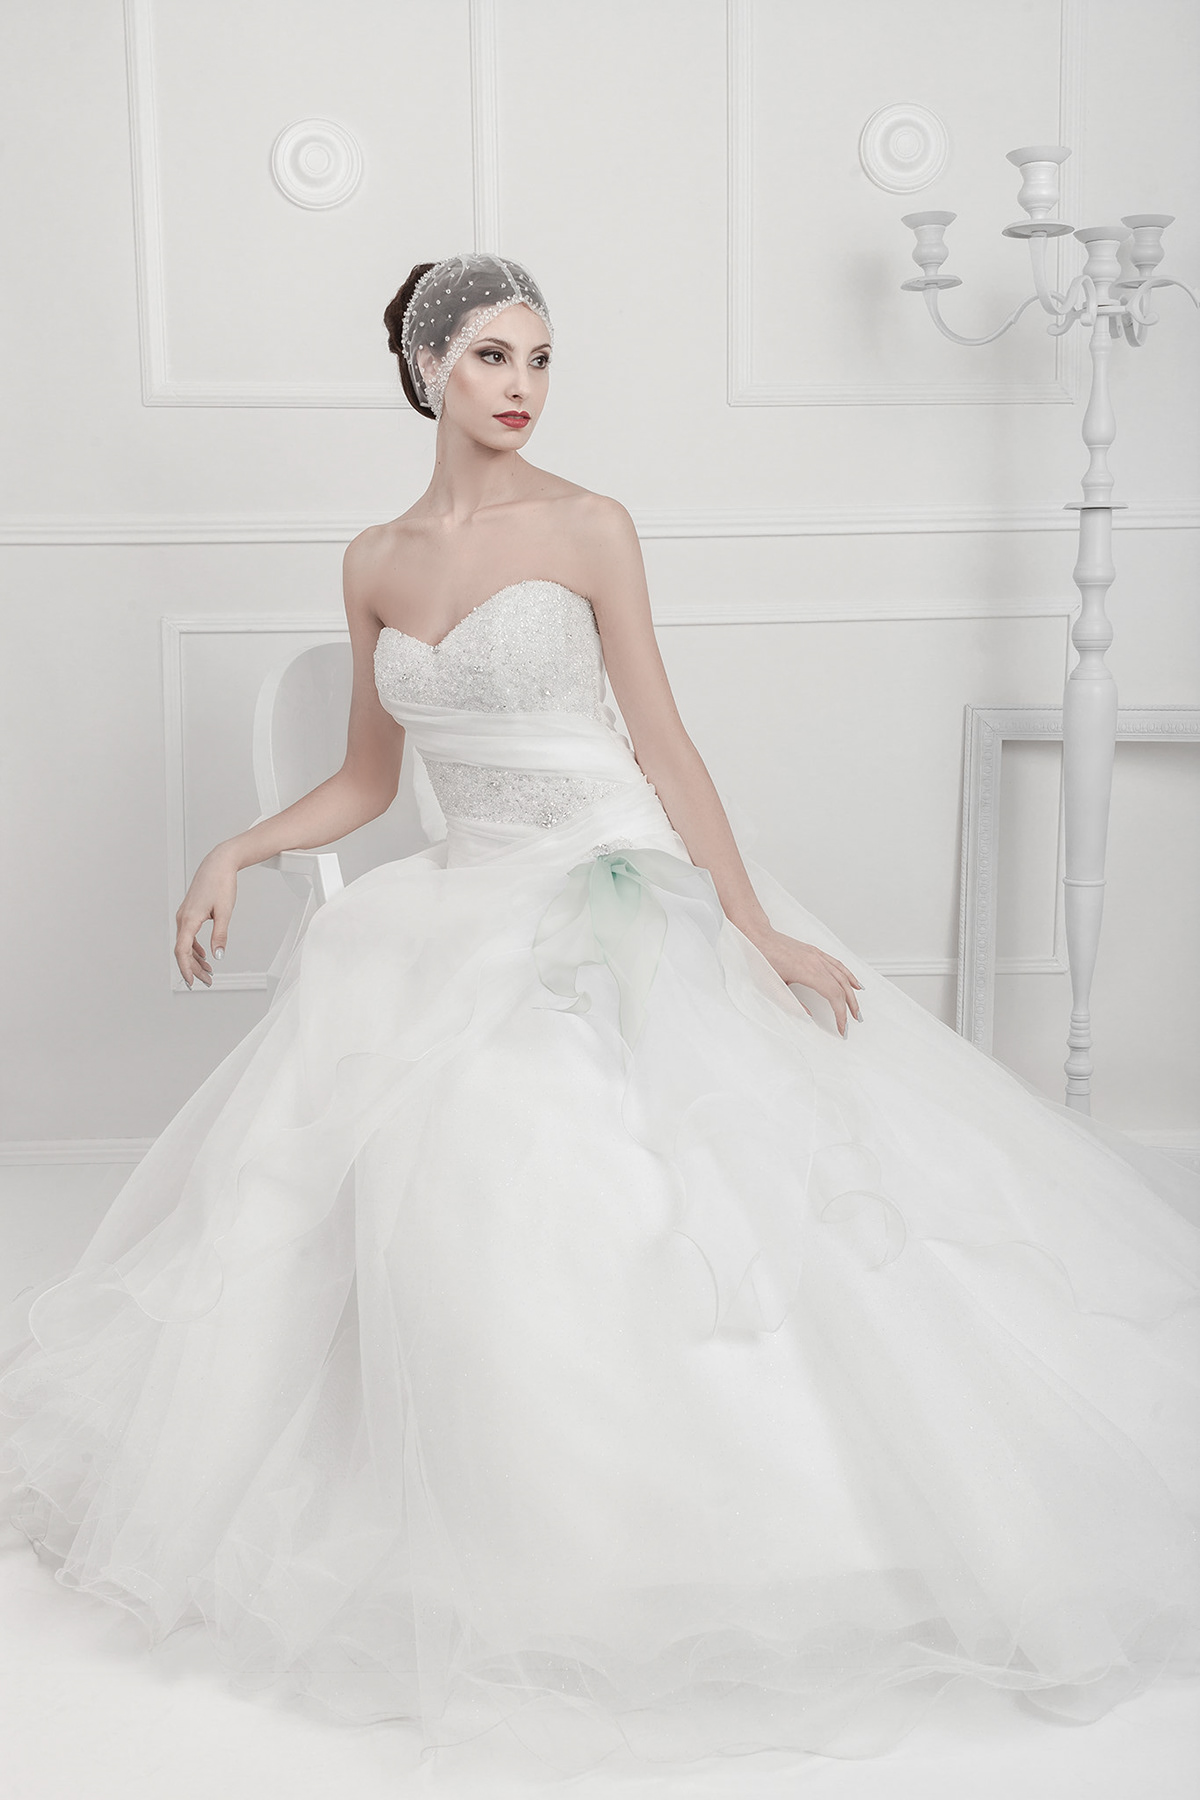 WEDDING DRESS studio model ligt total white wedding